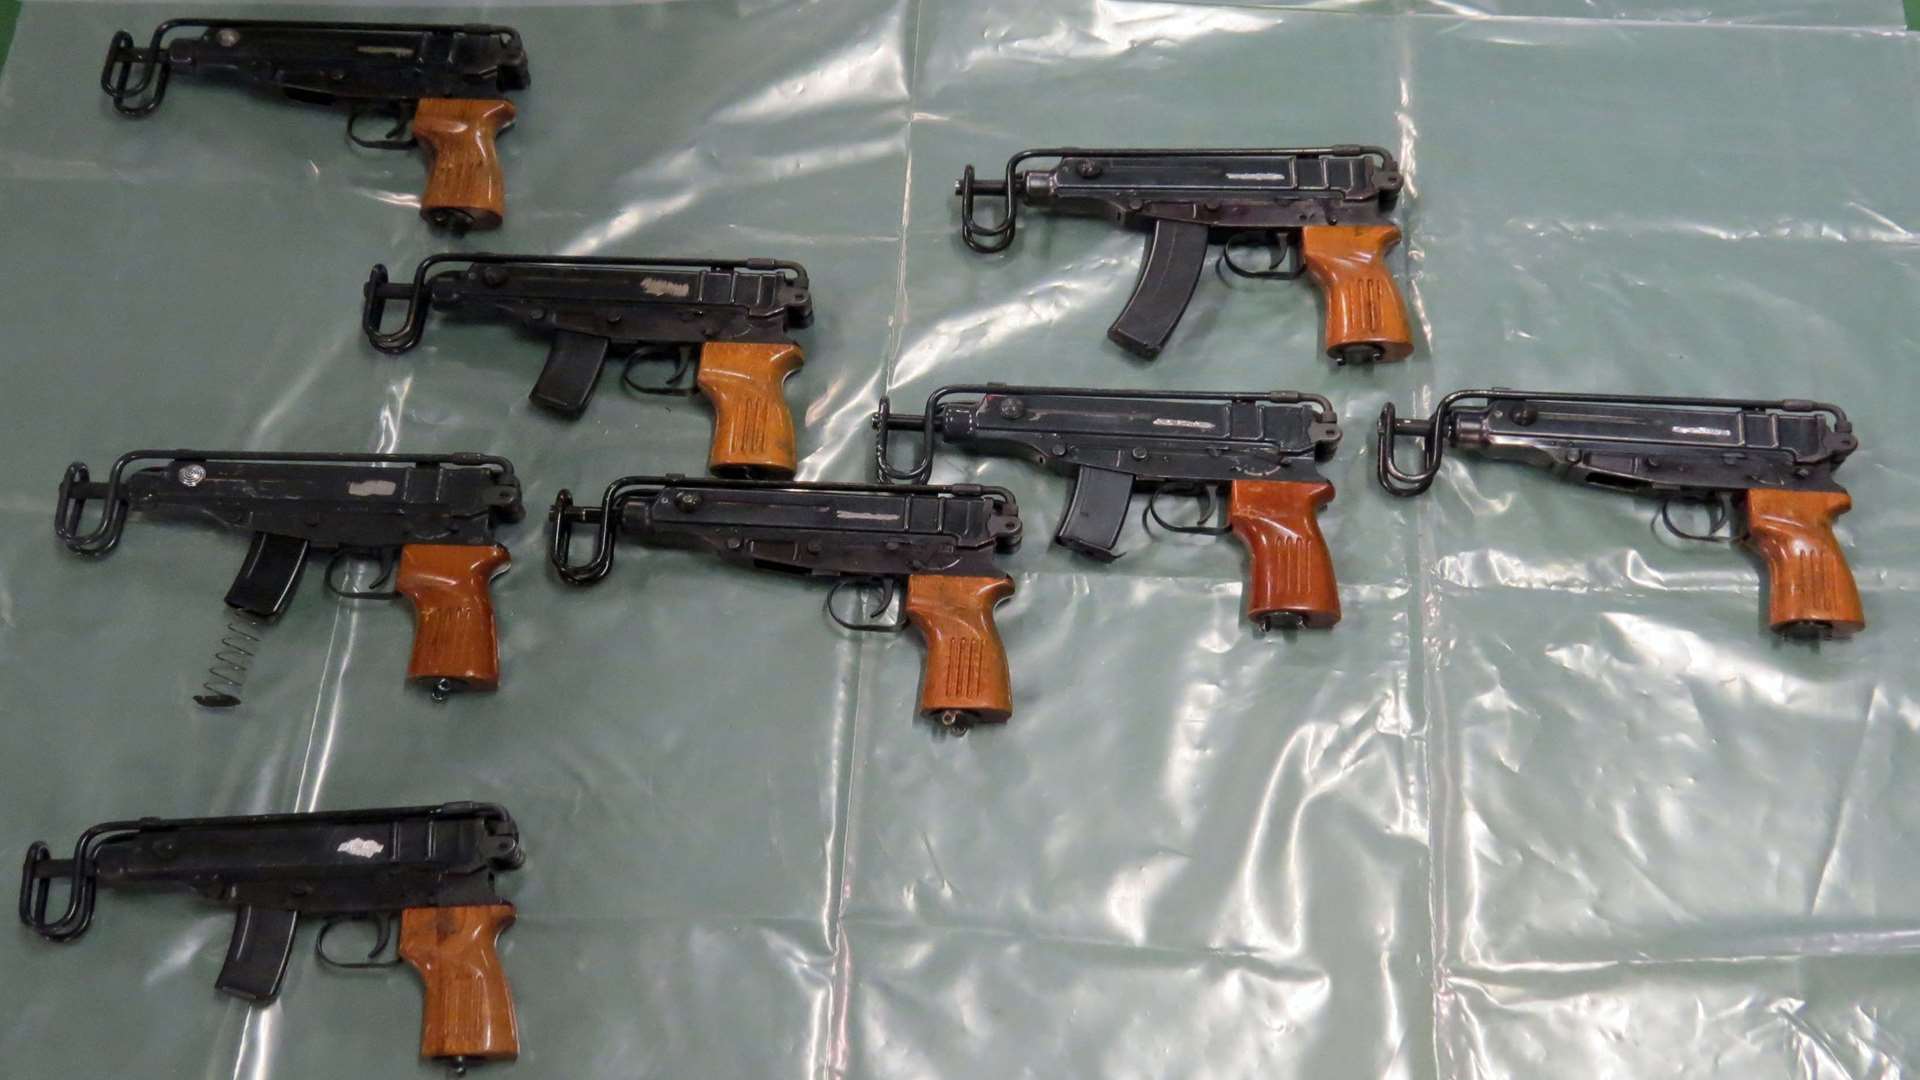 Skorpian machine pistols seized near Cuxton Marina